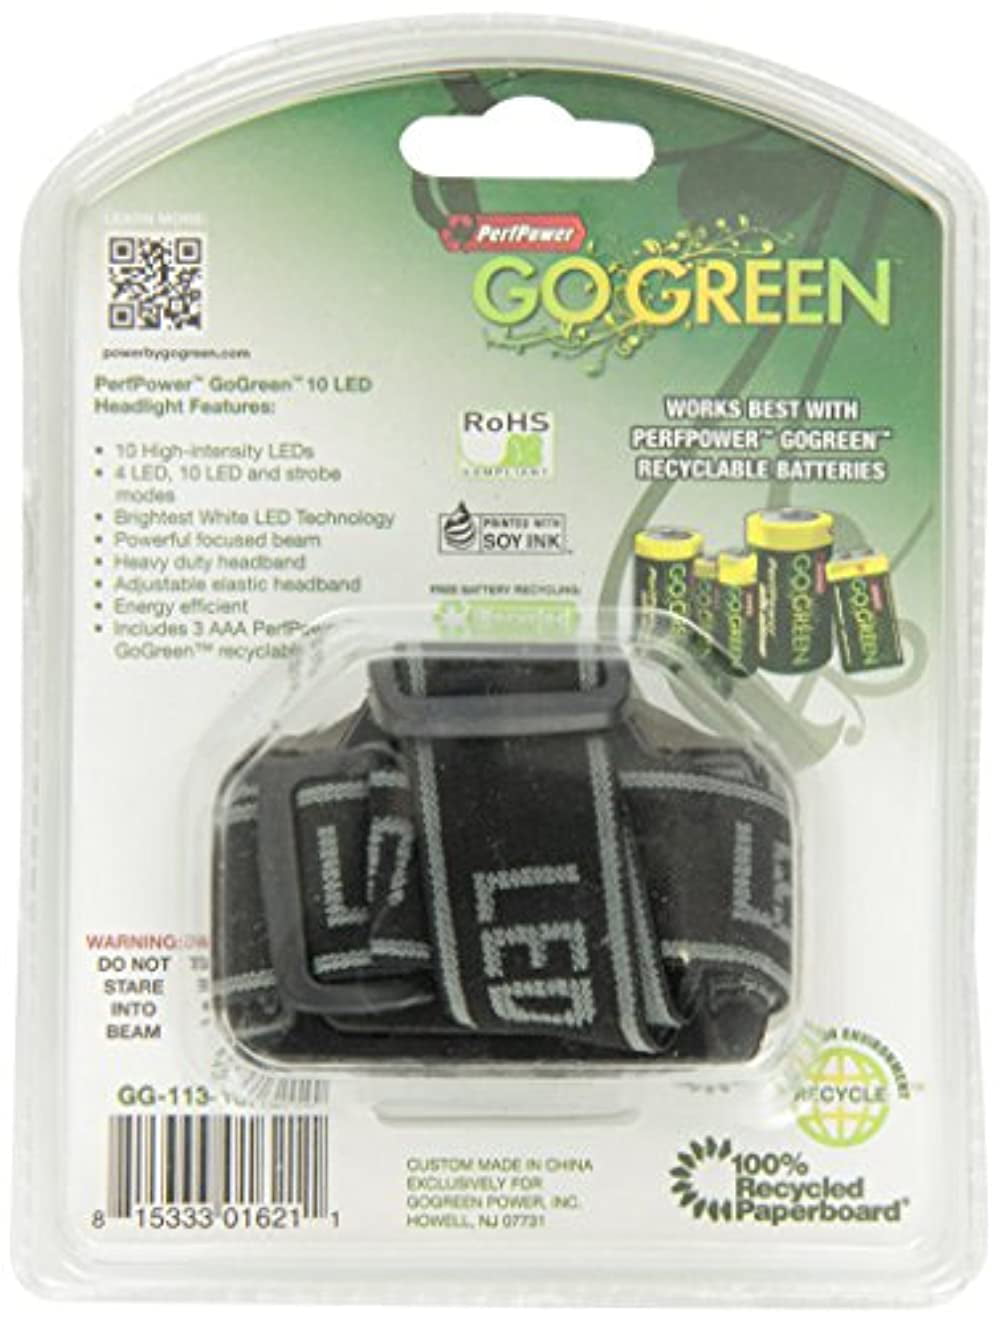 Perfpower Go Green GG-113-10HLBL 10 Led High Intensity Headlamp Head Band